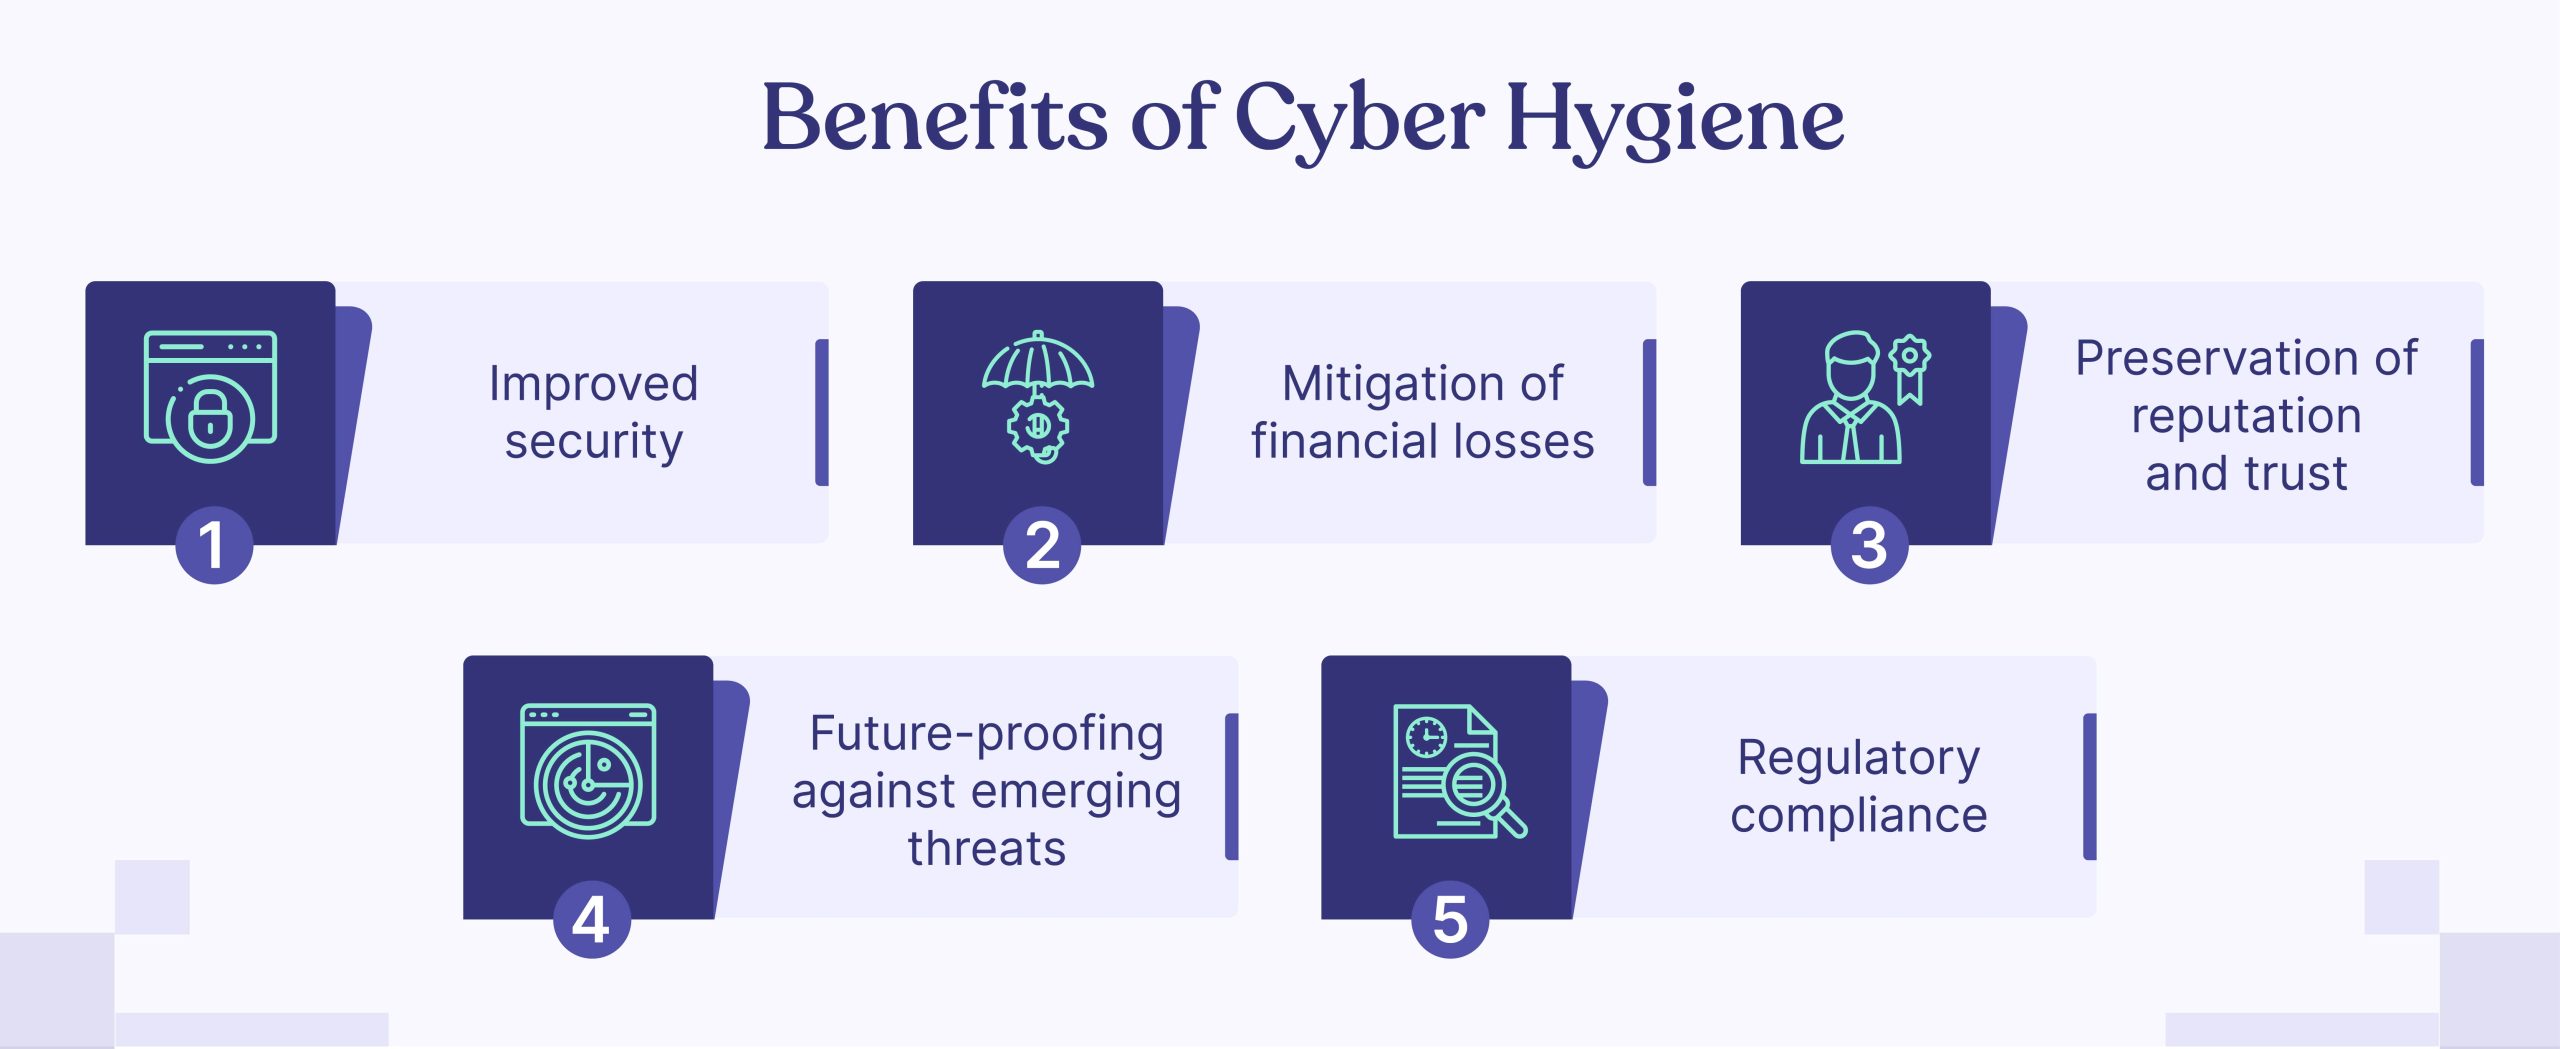 Benefits of Cyber Hygiene